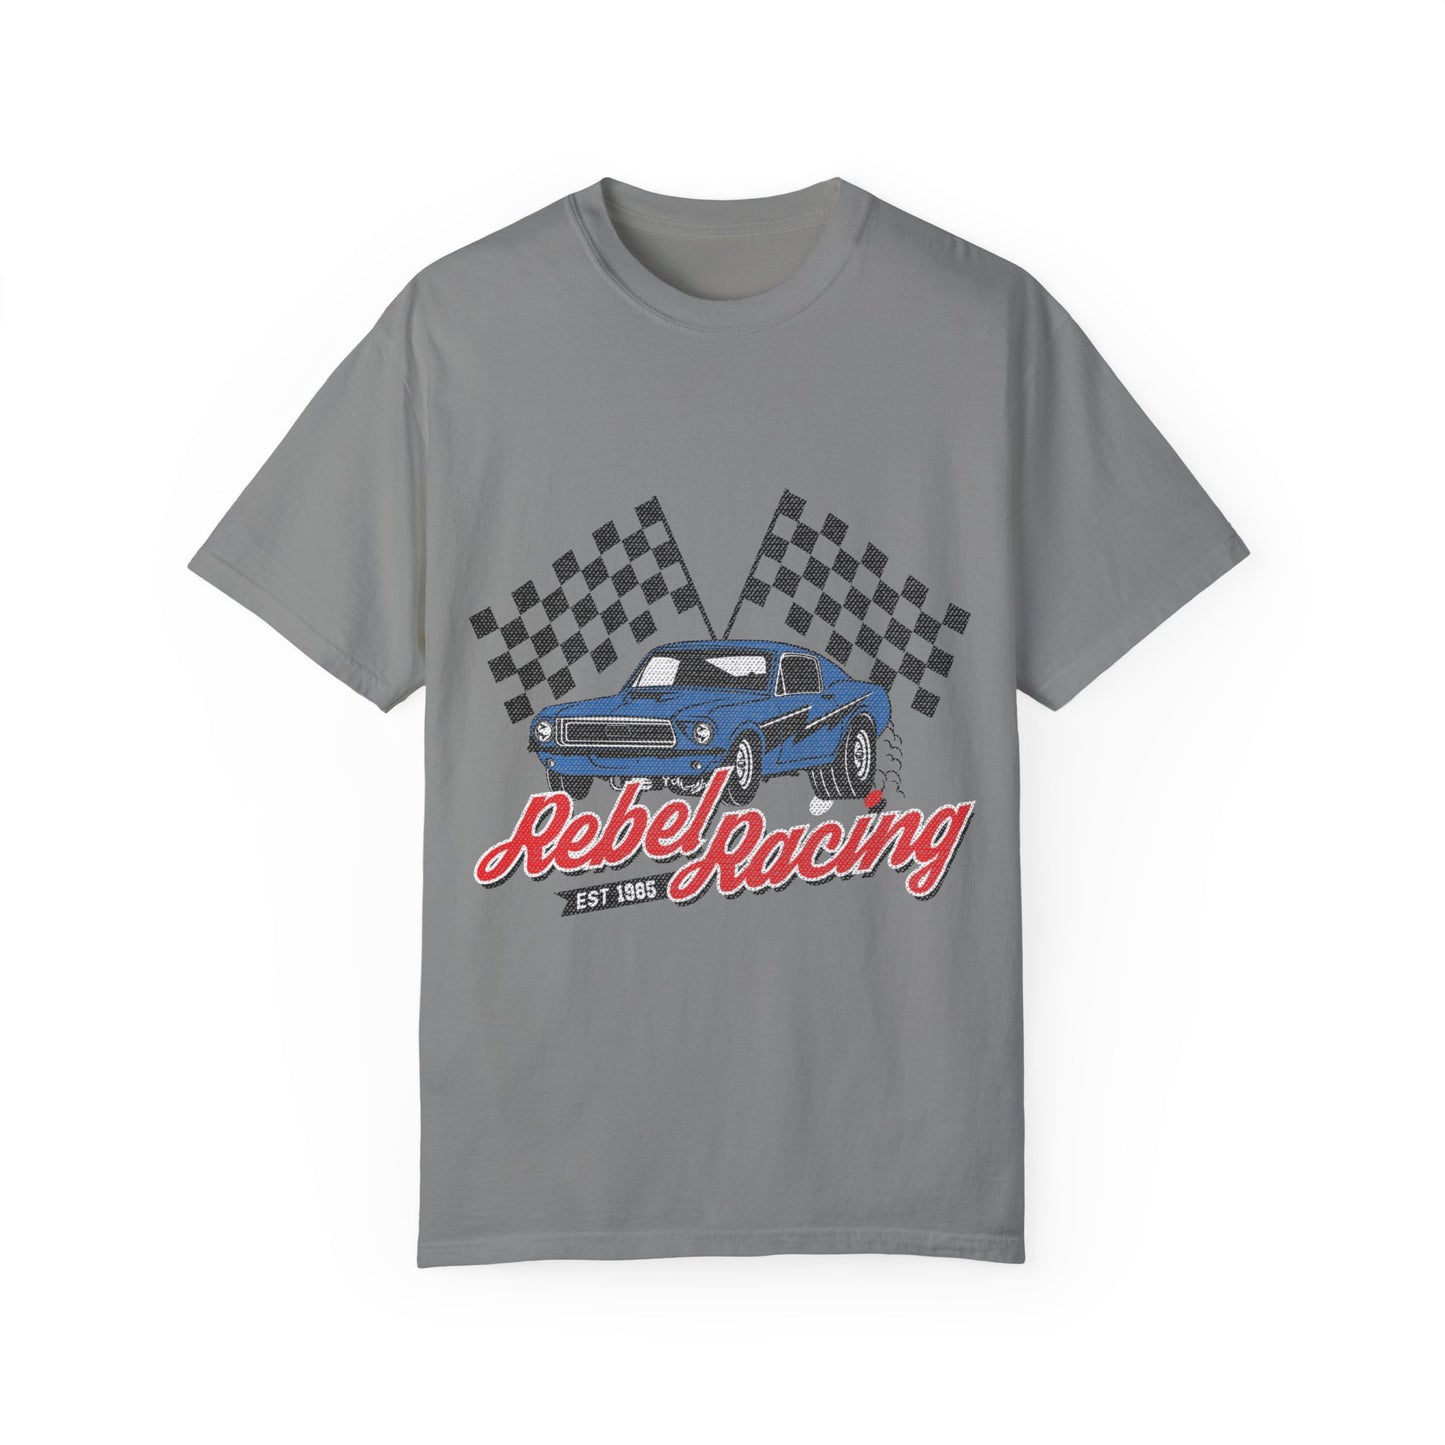 Rebel Racing Vintage Car T-shirt | Vintage Graphic Tee